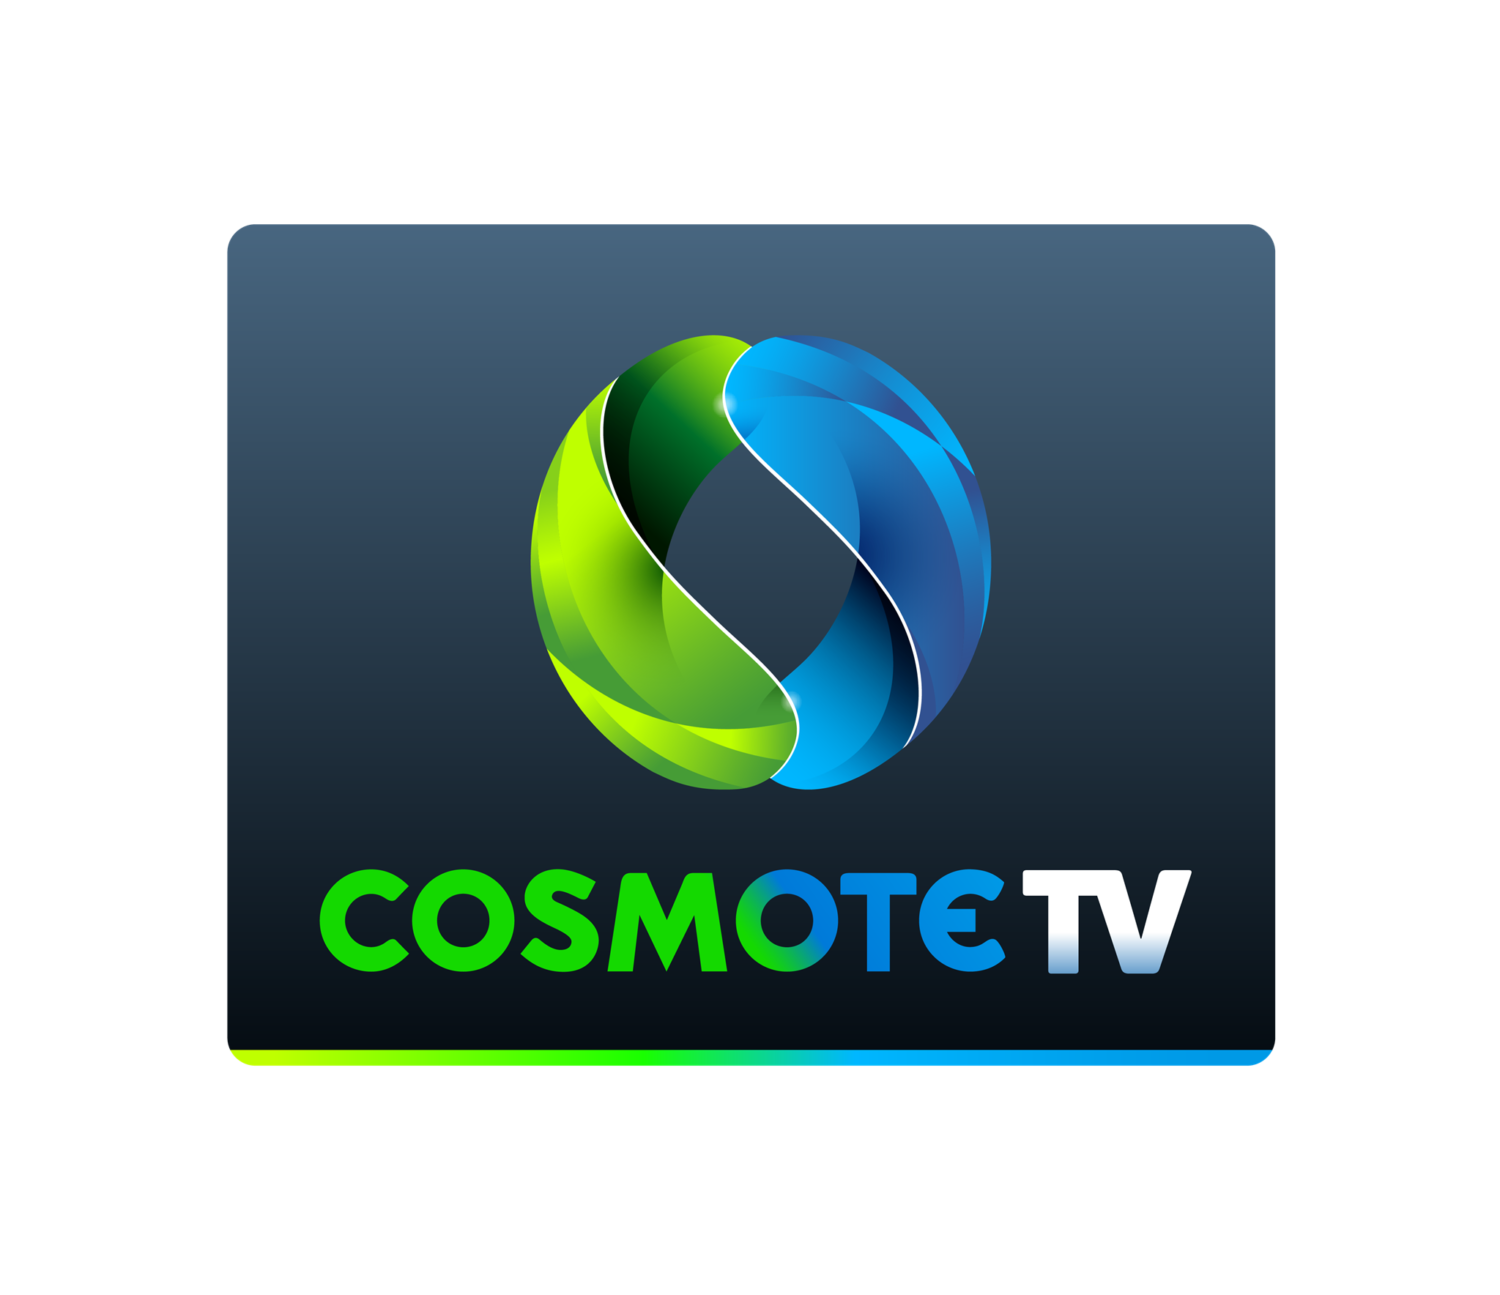 COSMOTE TV: Η δράση ξεκινάει στη Lega Serie A